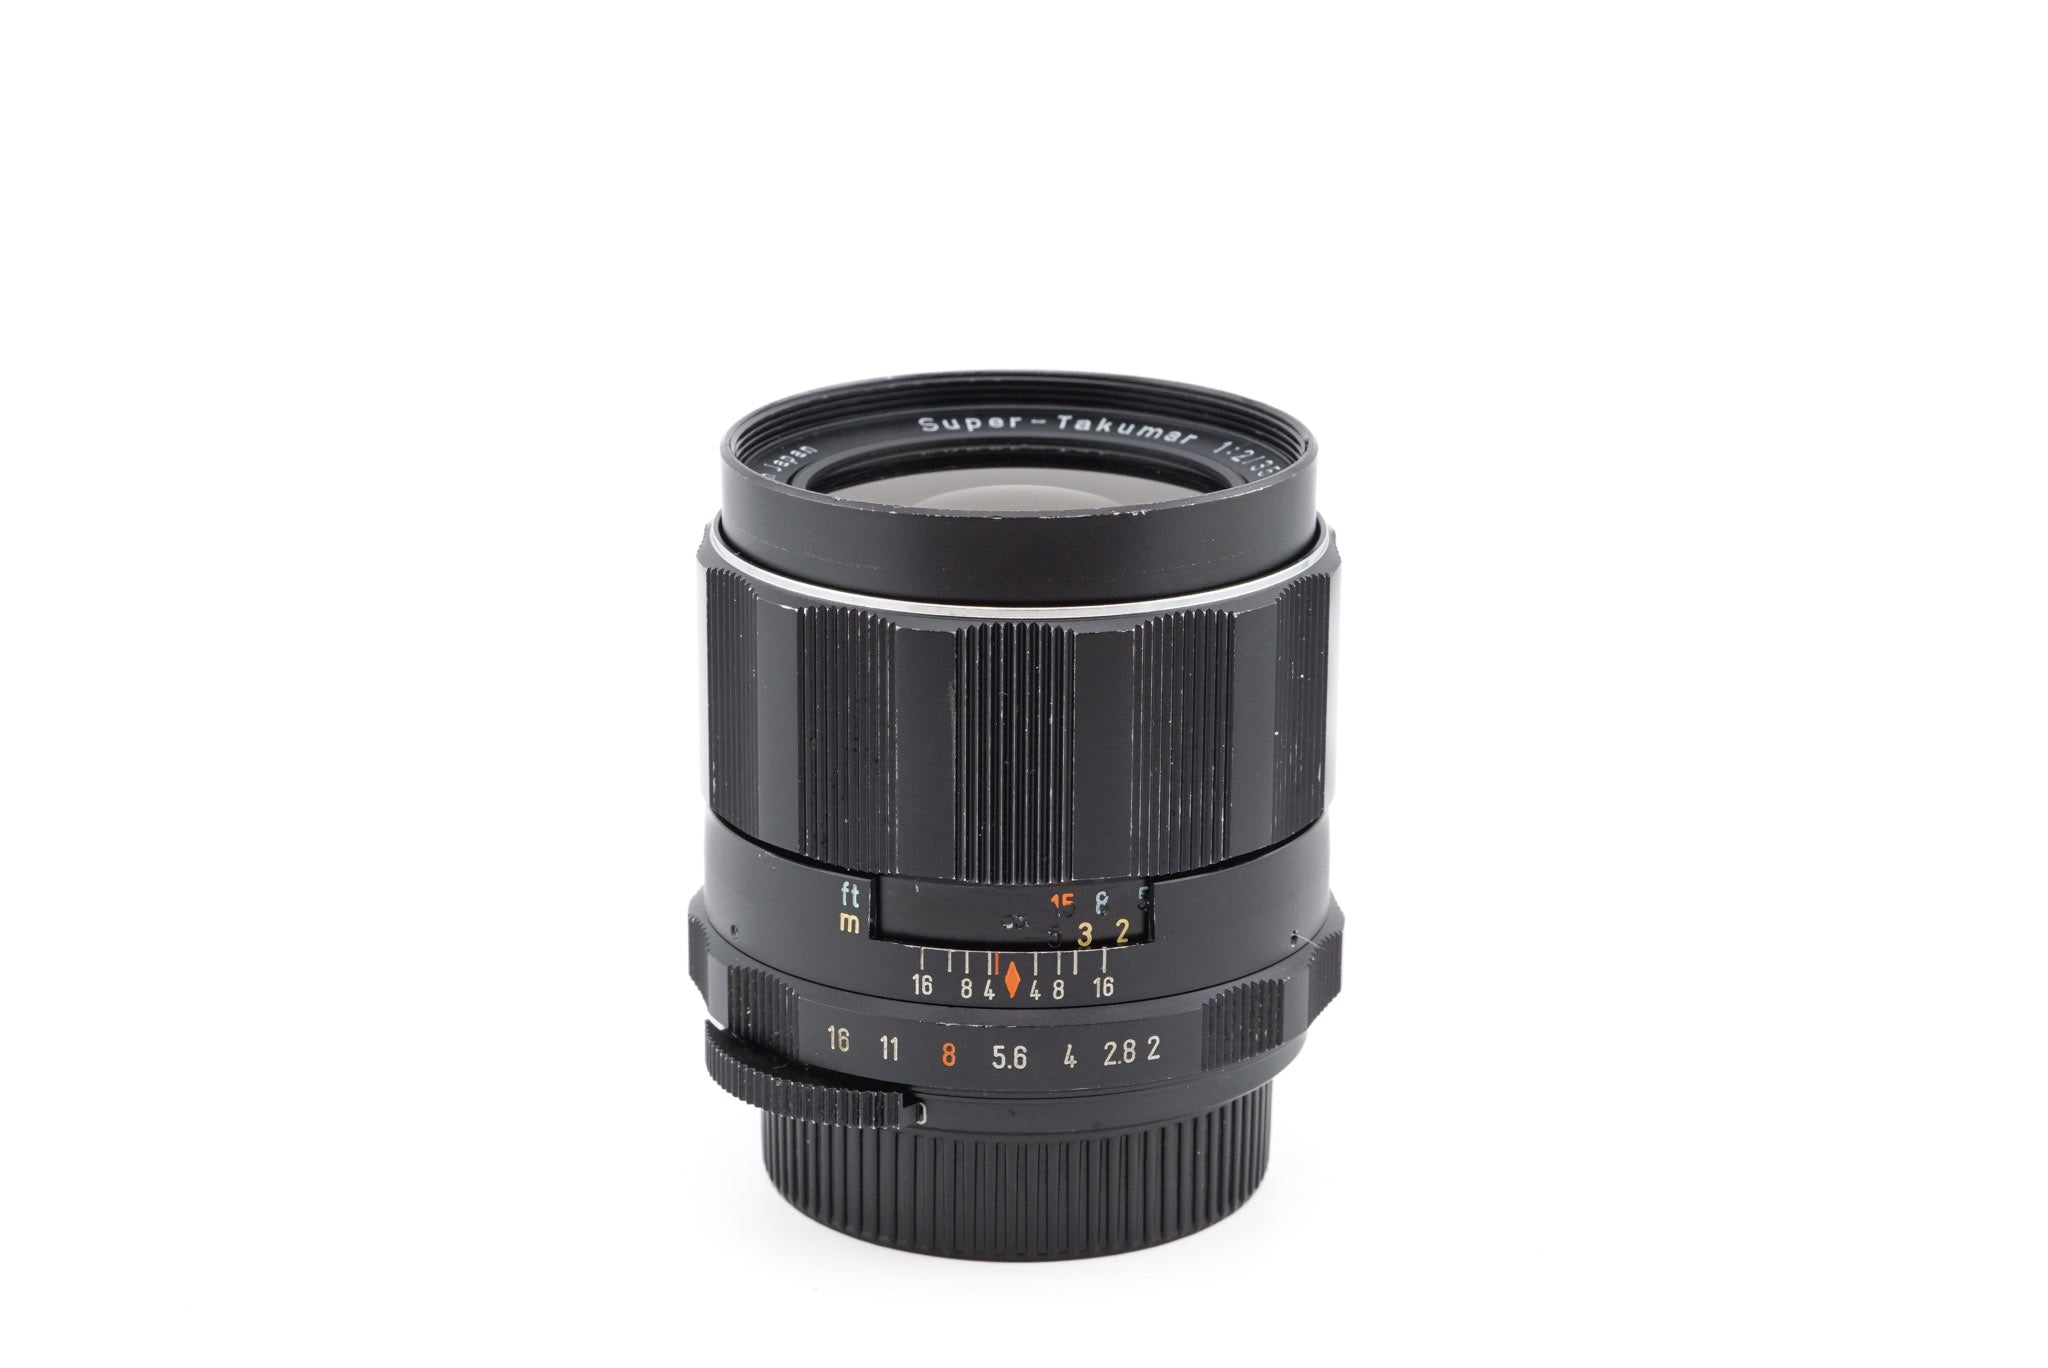 Pentax 35mm f2 Super-Takumar (Model II) - Lens